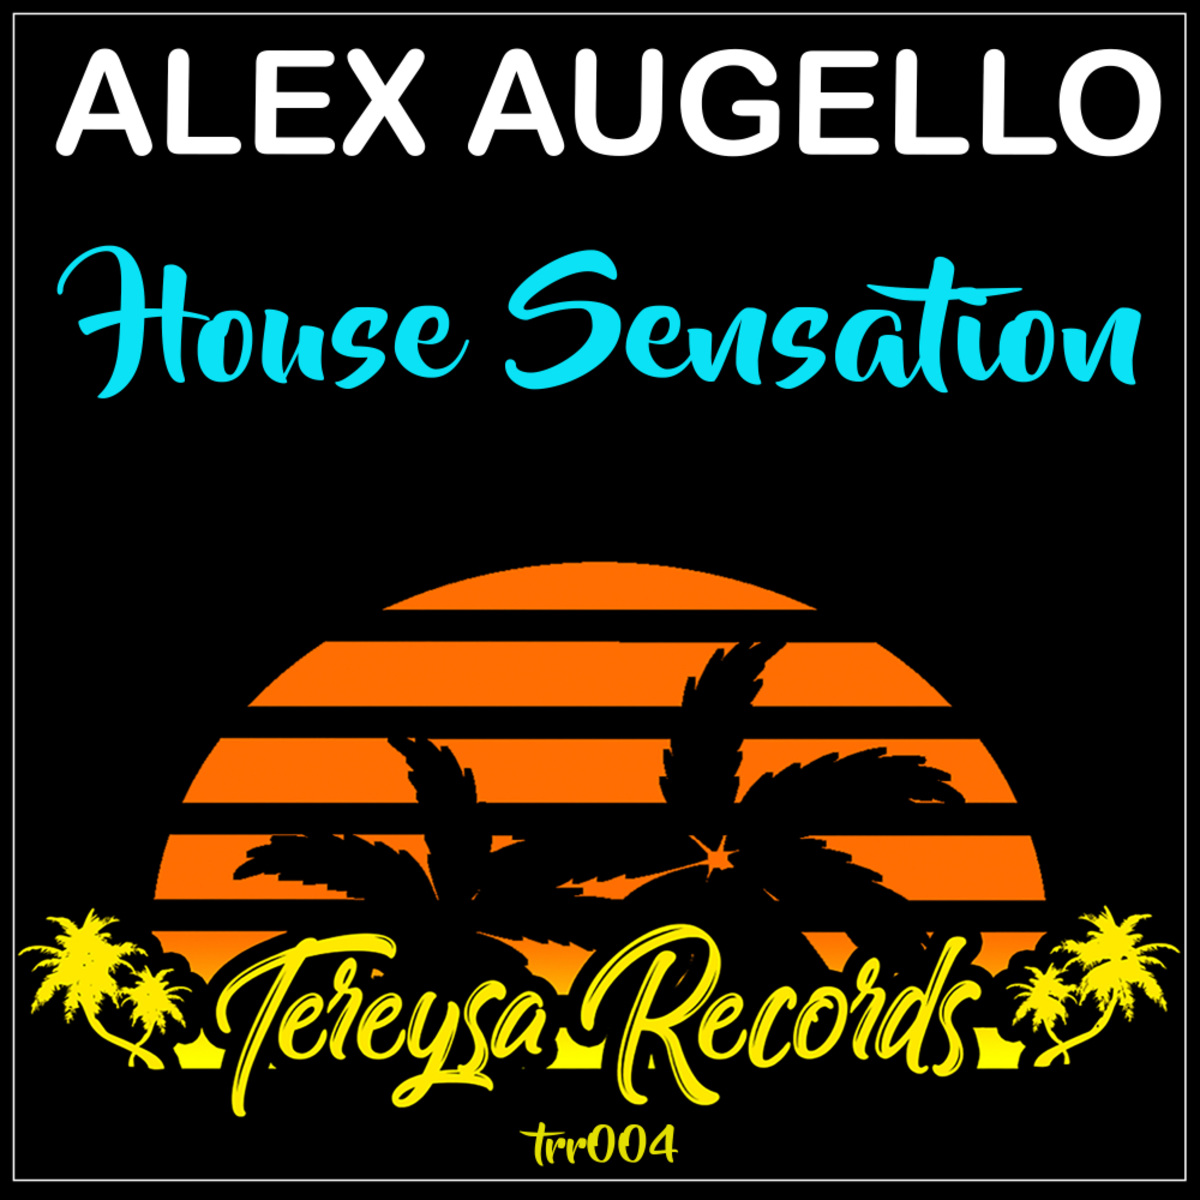 Alex Augello - House Sensation / Tereysa Records